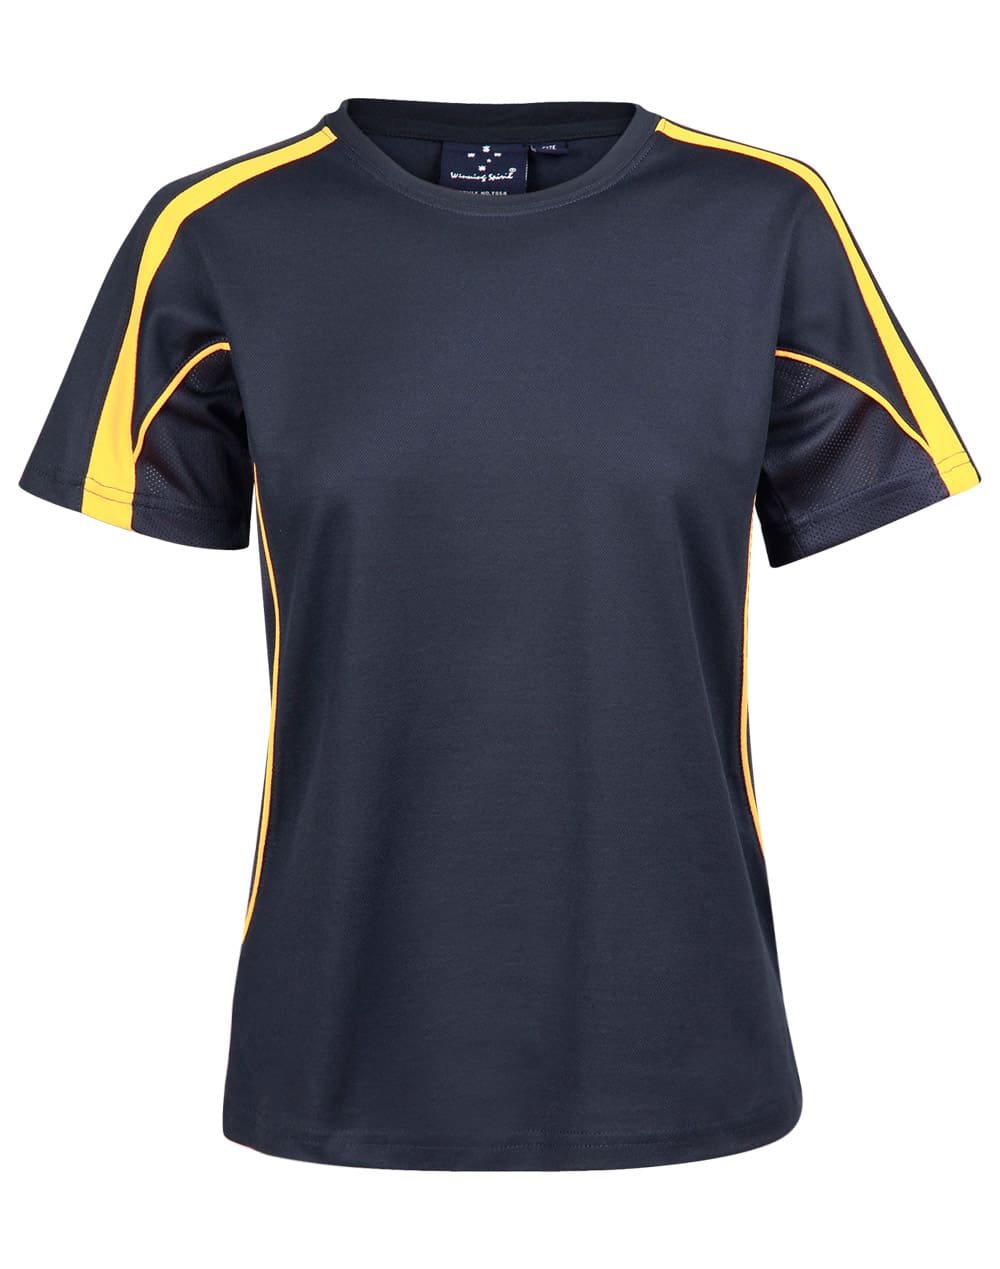 Custom (Black Ash) Legend Ladies Short Sleeve Tee Shirts Online in Perth